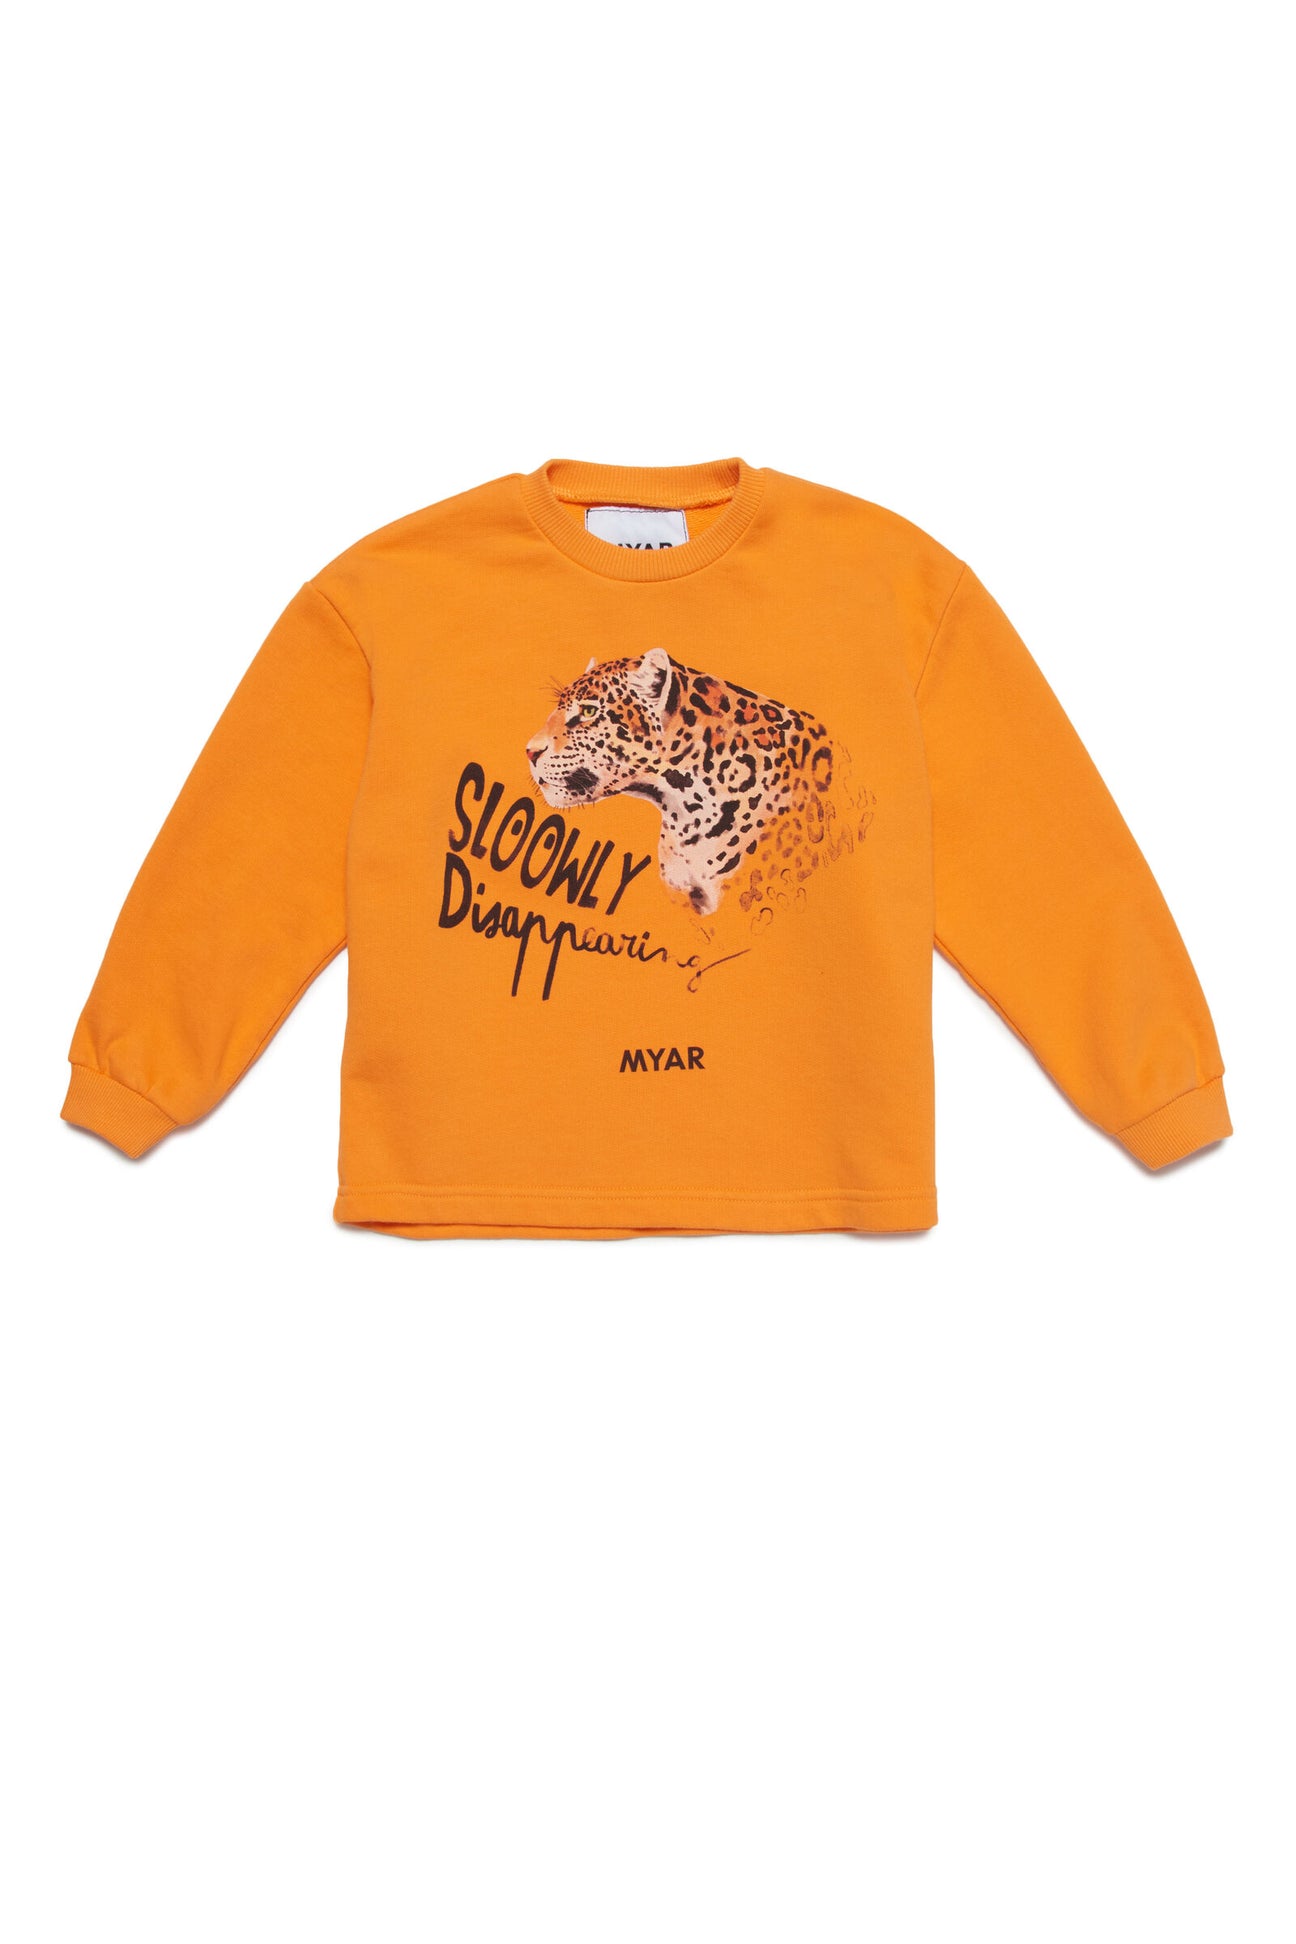 Deadstock orange fabric sweatshirt with digital print Sloowly Deadstock orange fabric sweatshirt with digital print Sloowly